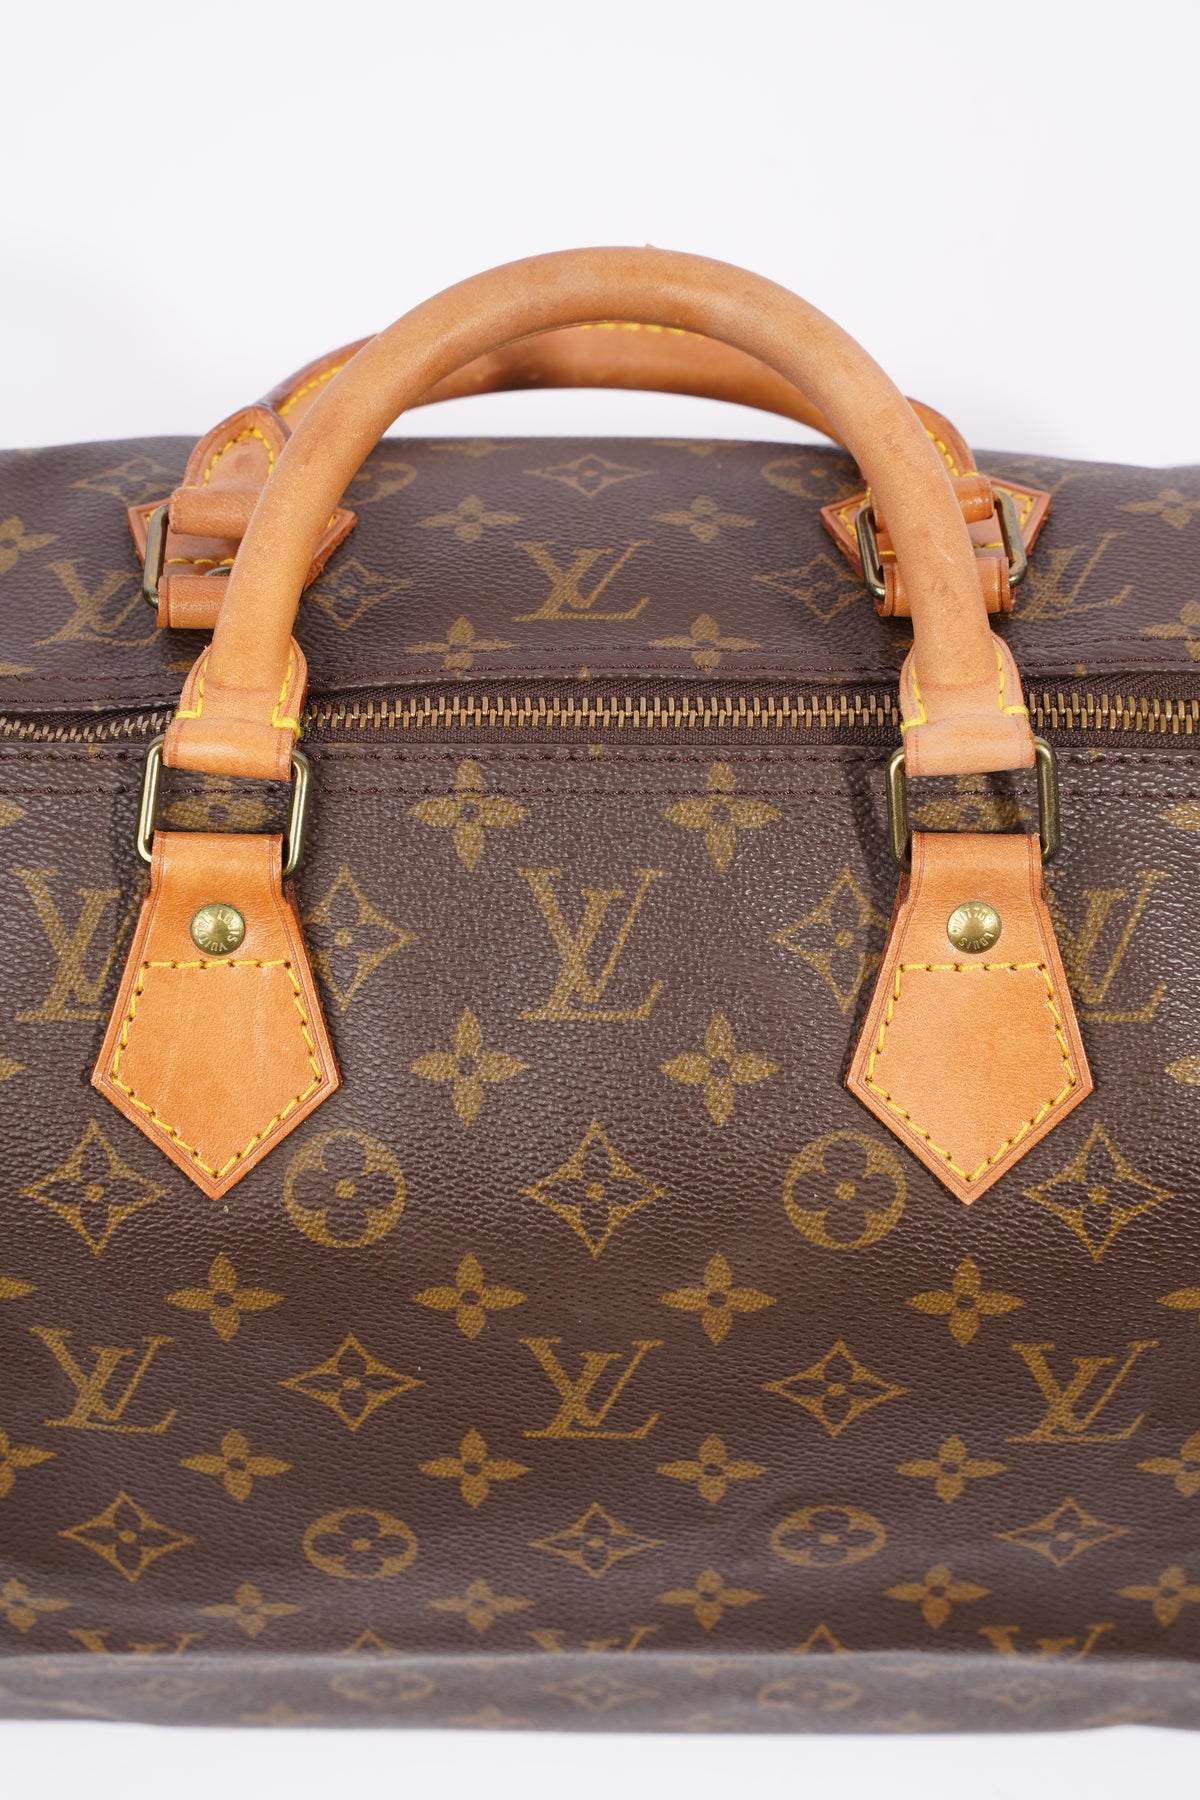 Louis Vuitton Speedy 40 Bandouliere Monogram Canvas Bag